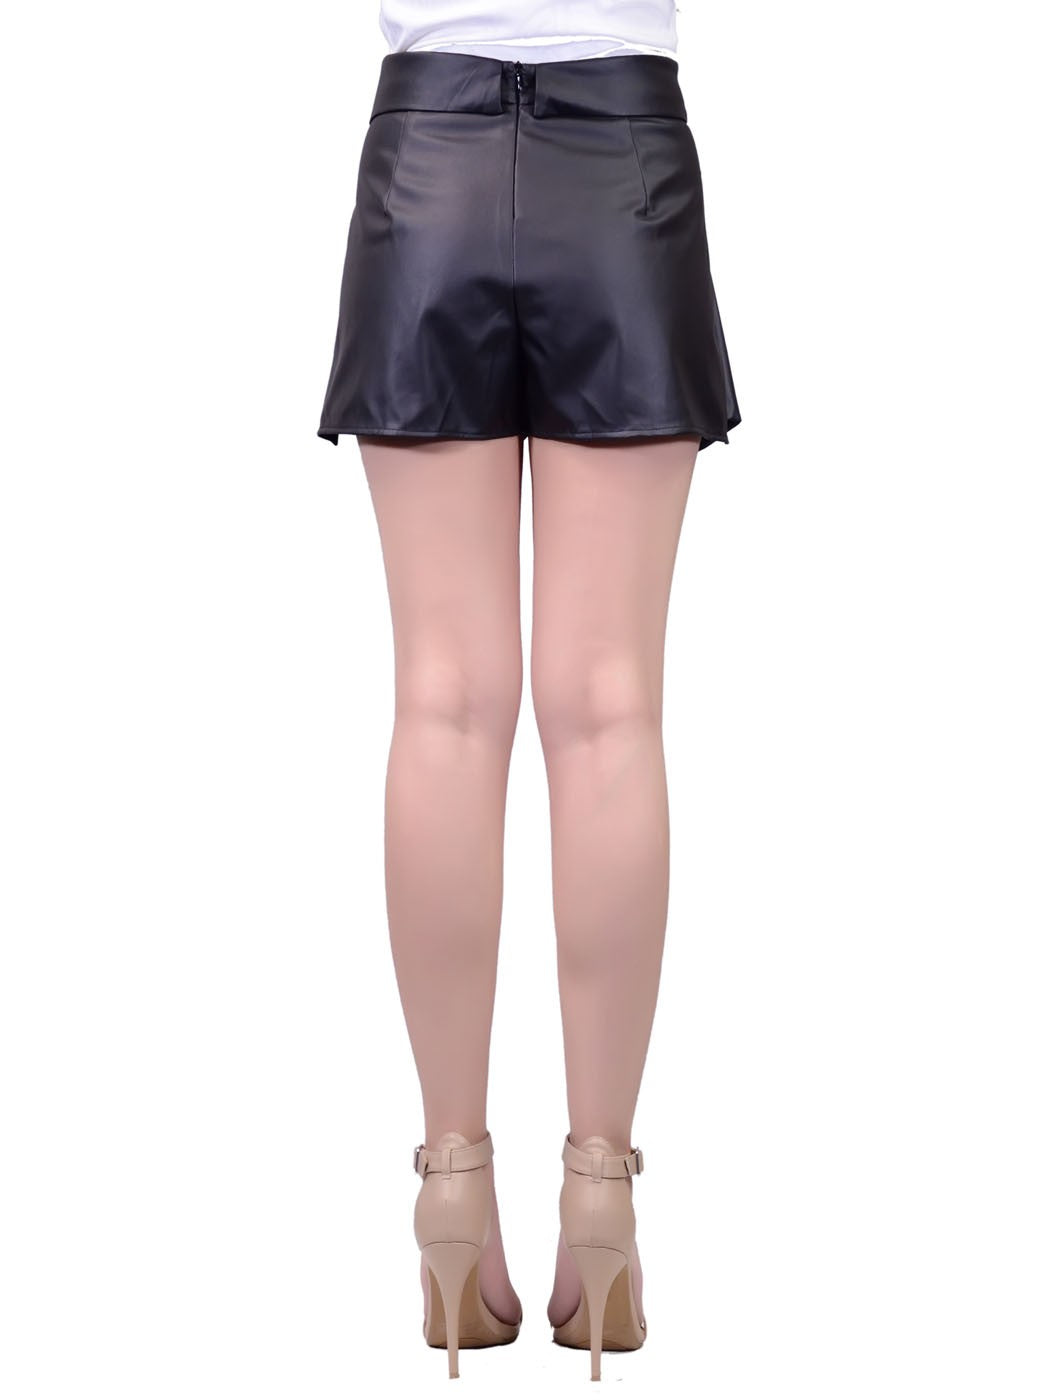 Uniq Urban Rock Chic Bold Fashion Faux Leather High Waist Skort Shorts - ALILANG.COM